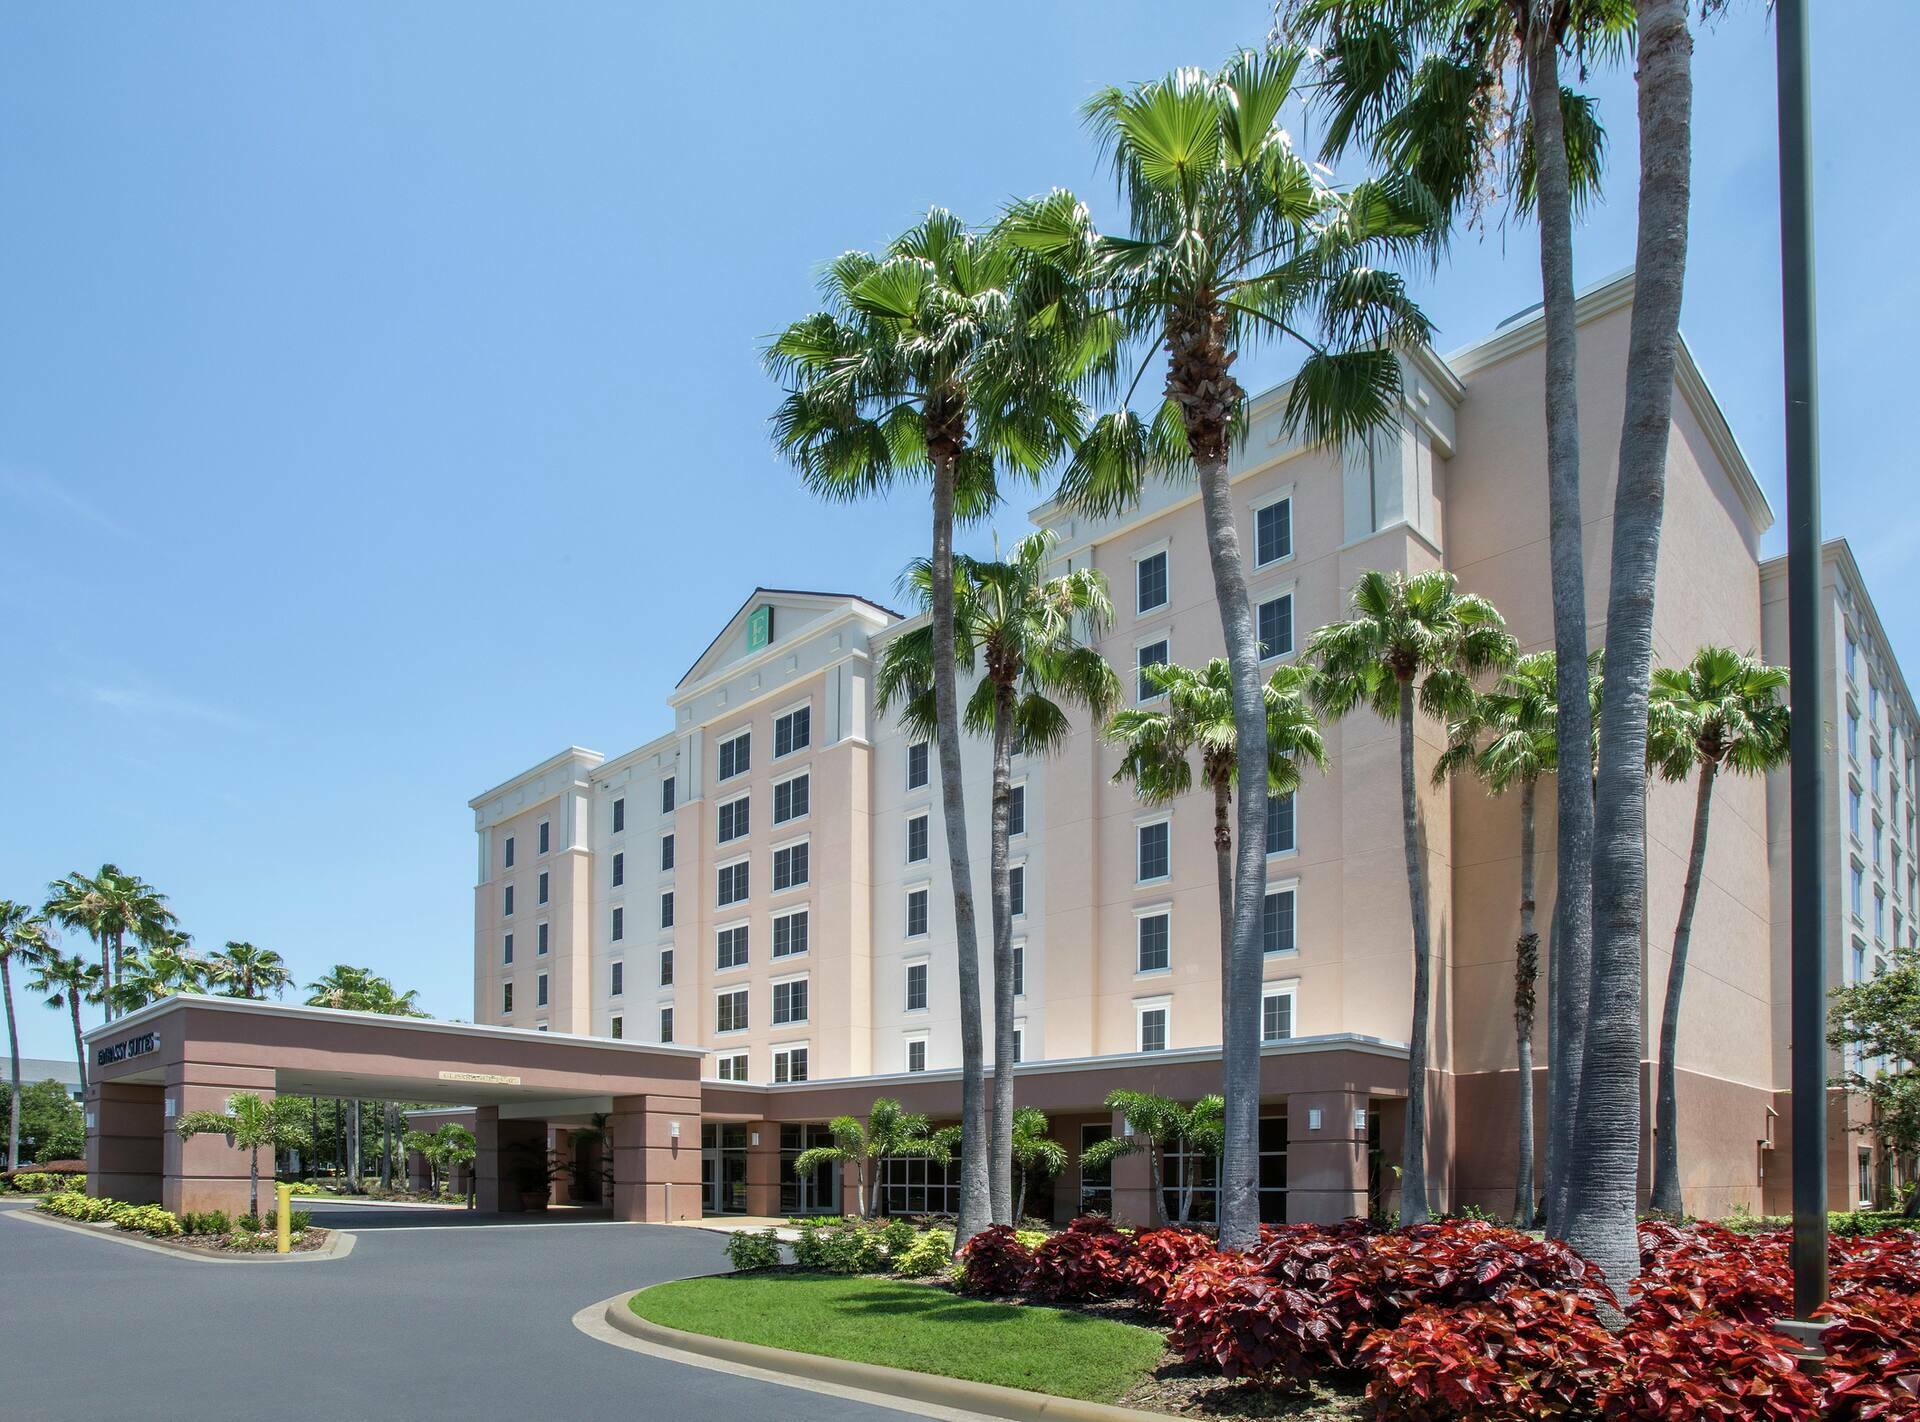 Photo of Embassy Suites by Hilton Orlando Airport, Orlando, FL